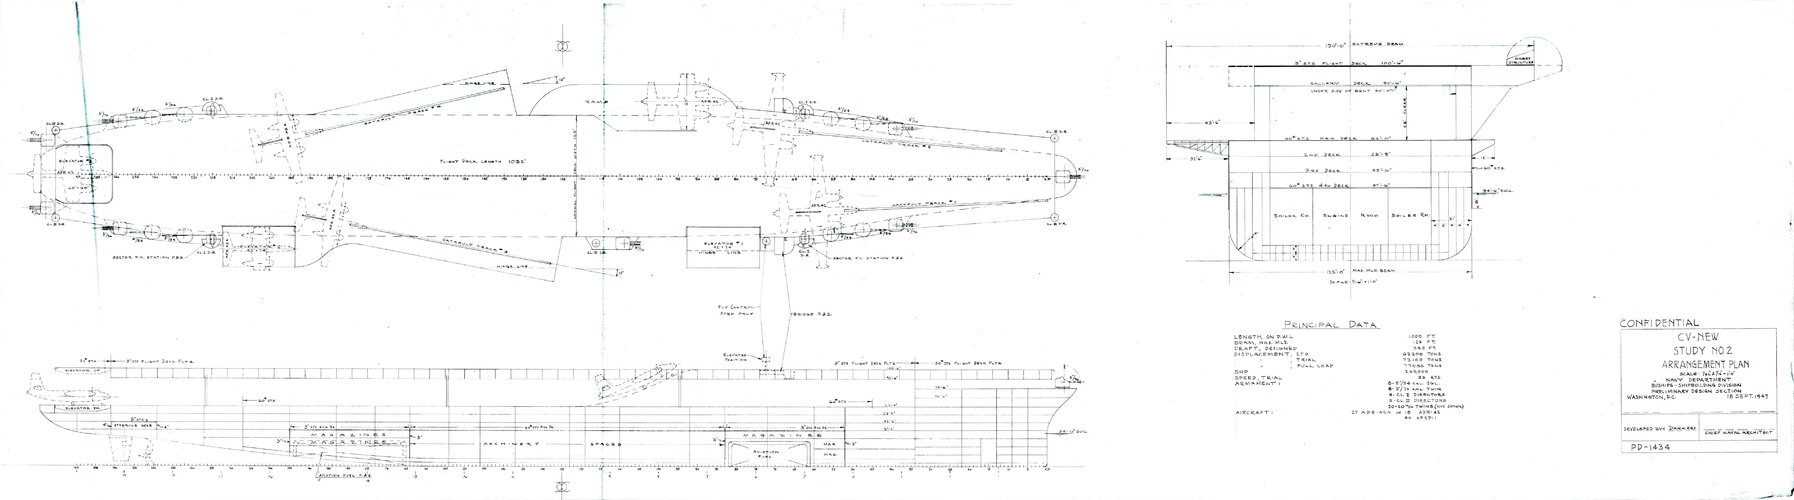 USS_United_States_(CVA-58)_preliminary_design_drawing,_18_September_1947.jpg